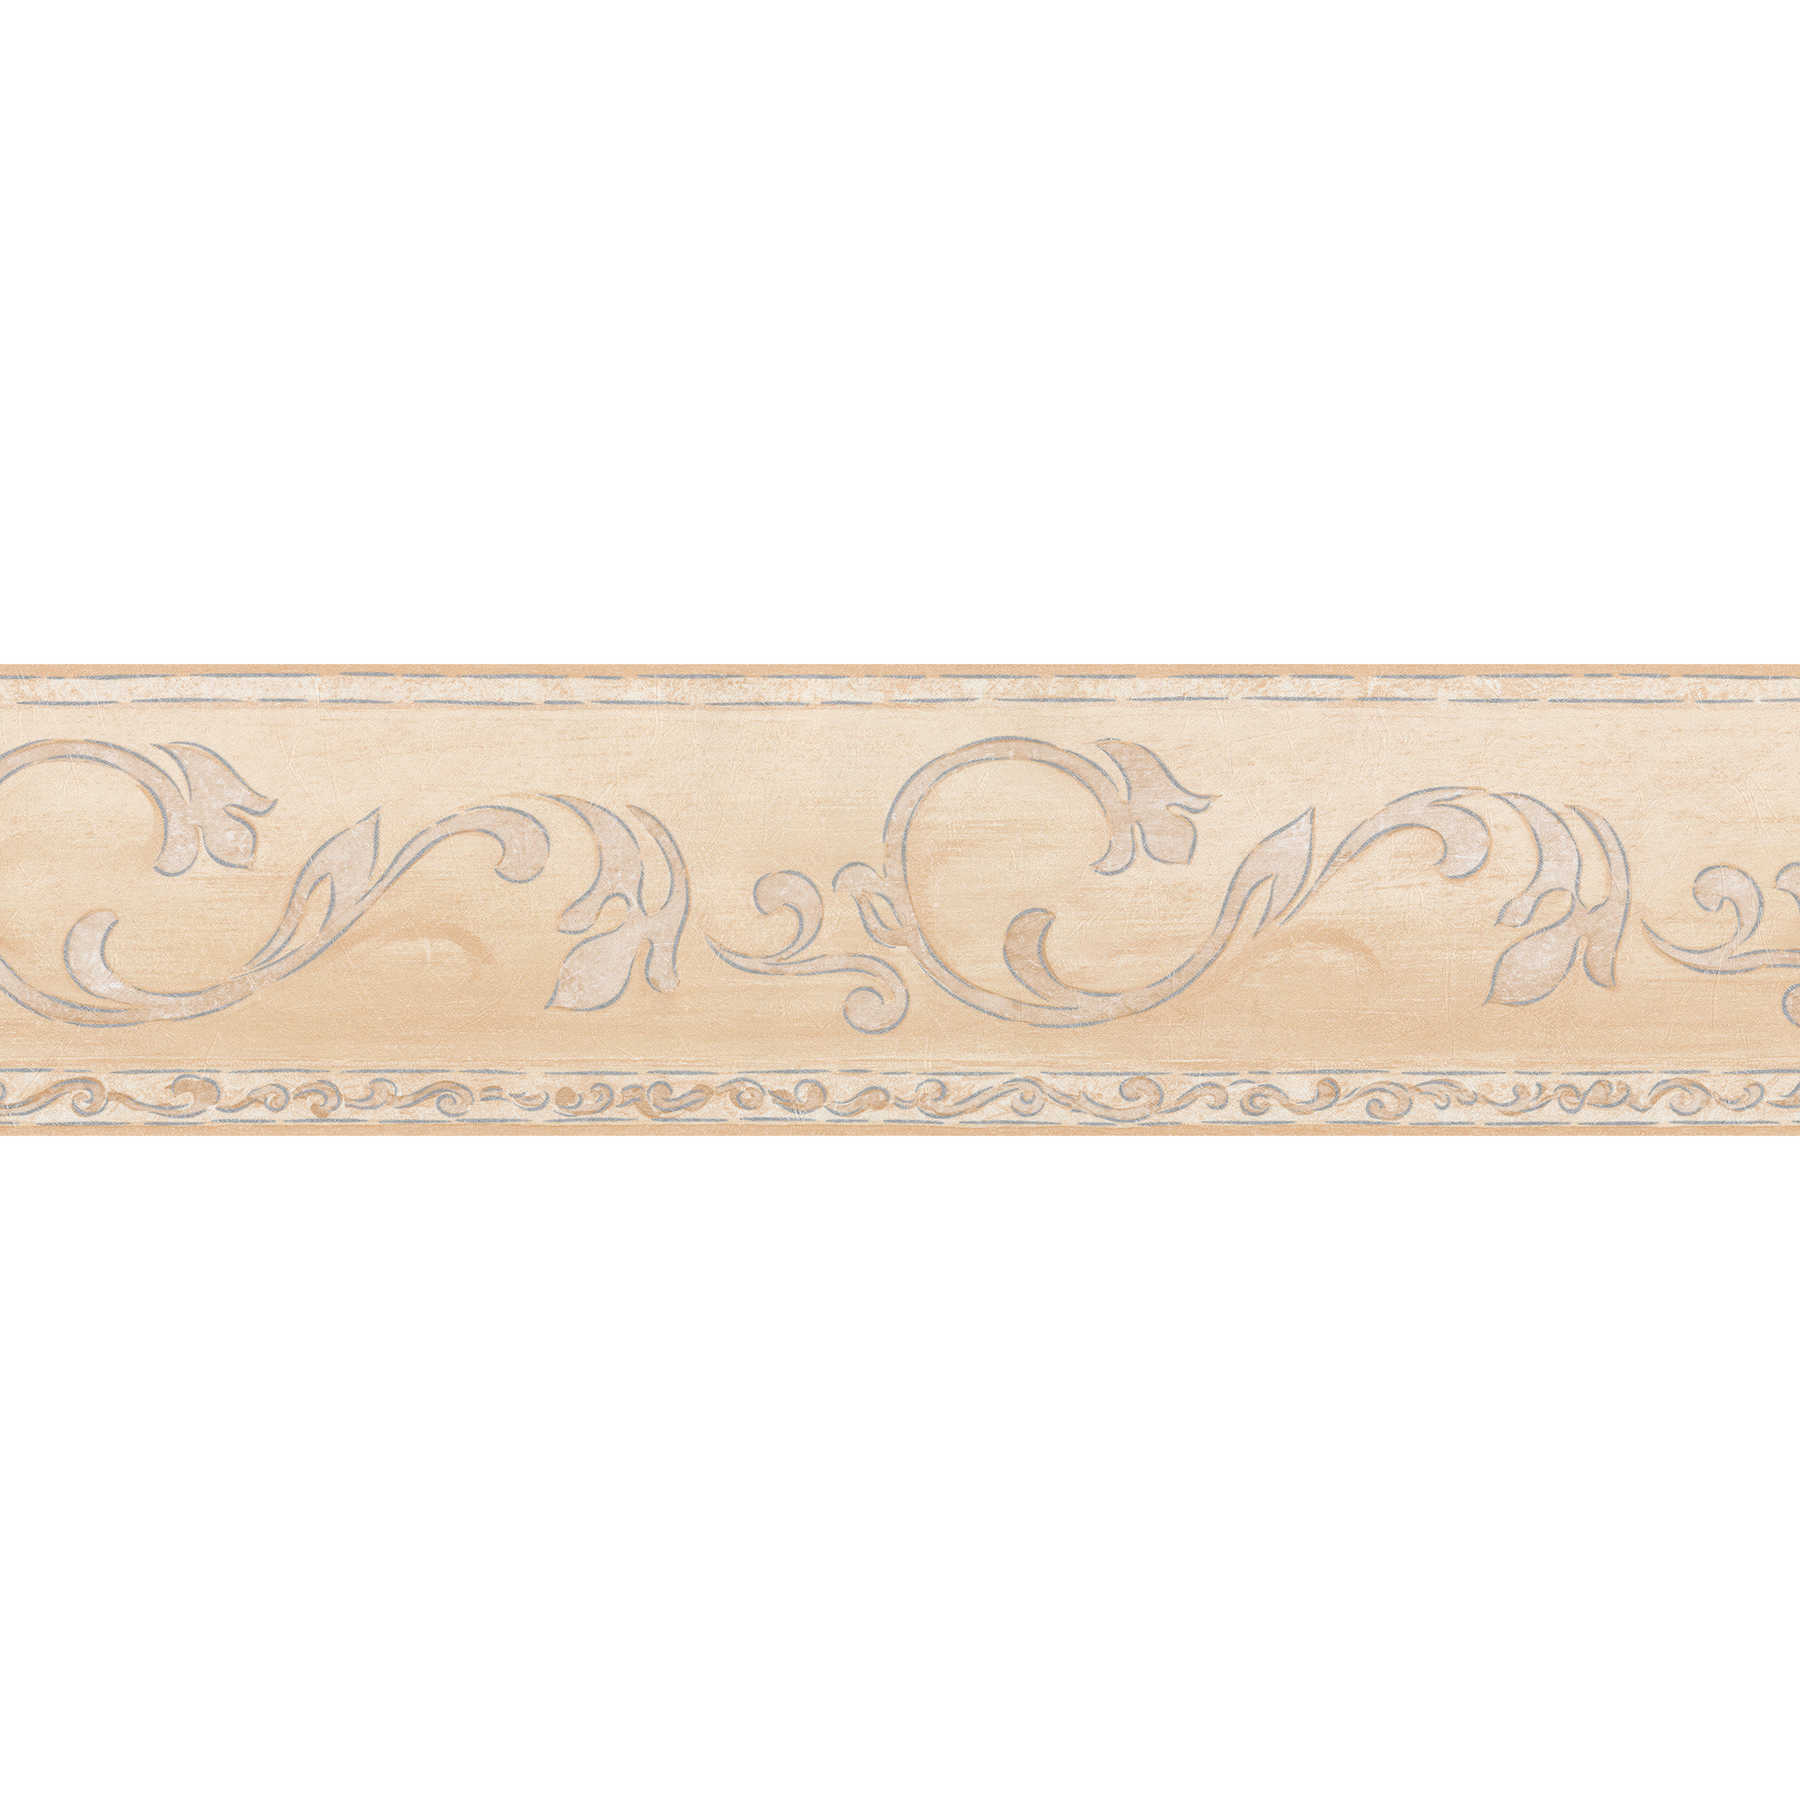         Wallpaper border with decorative pattern - beige, grey
    